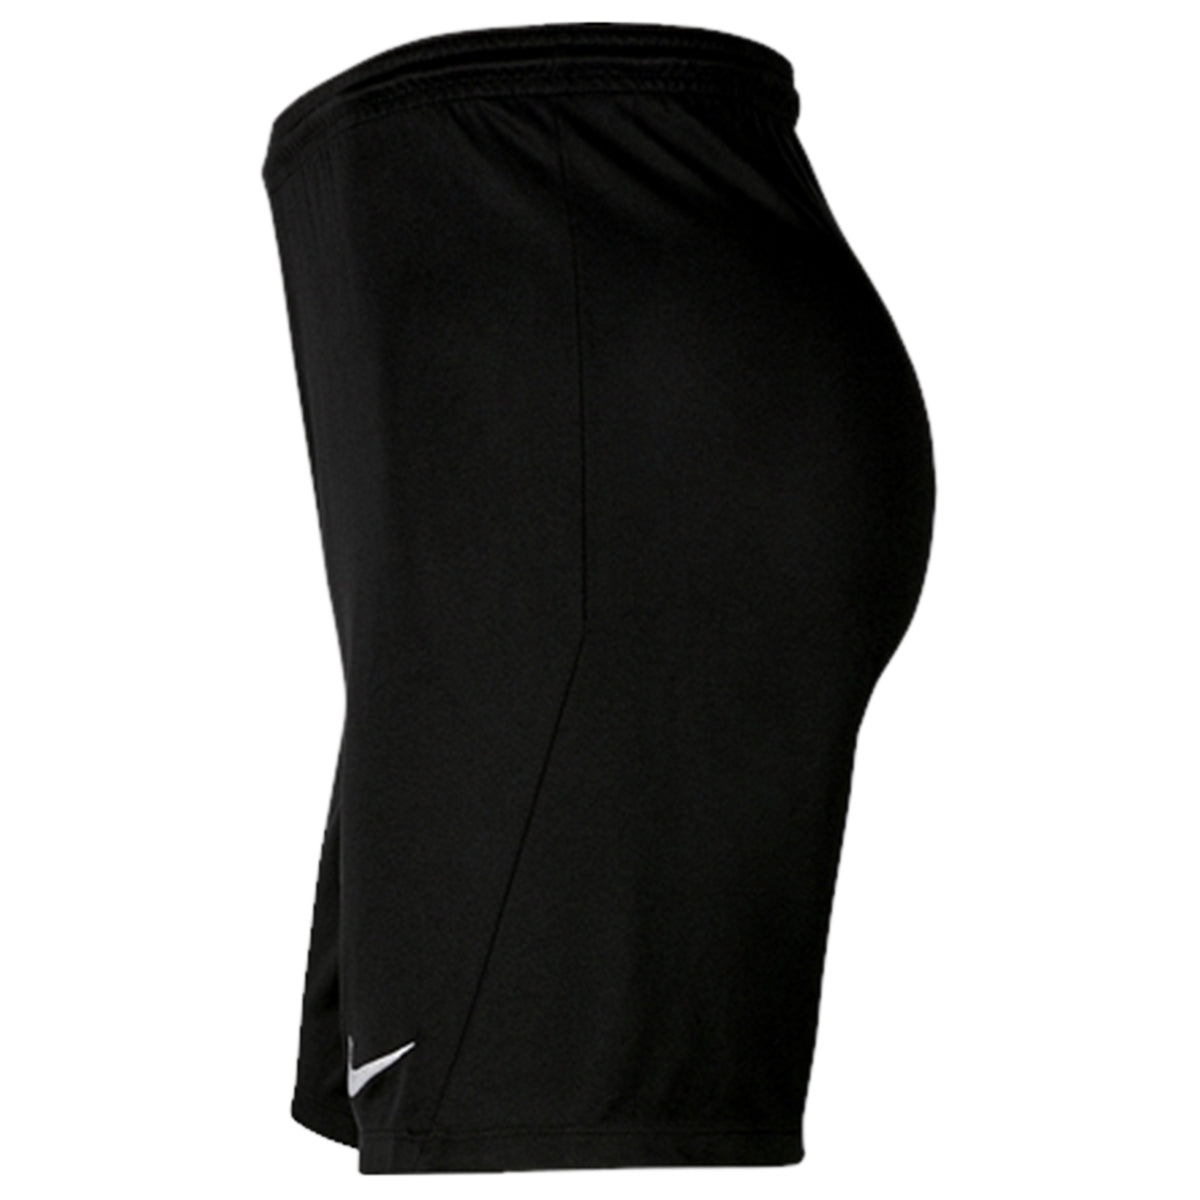 Nike Dri-fit Training Shorts Mens Style : Bv6855